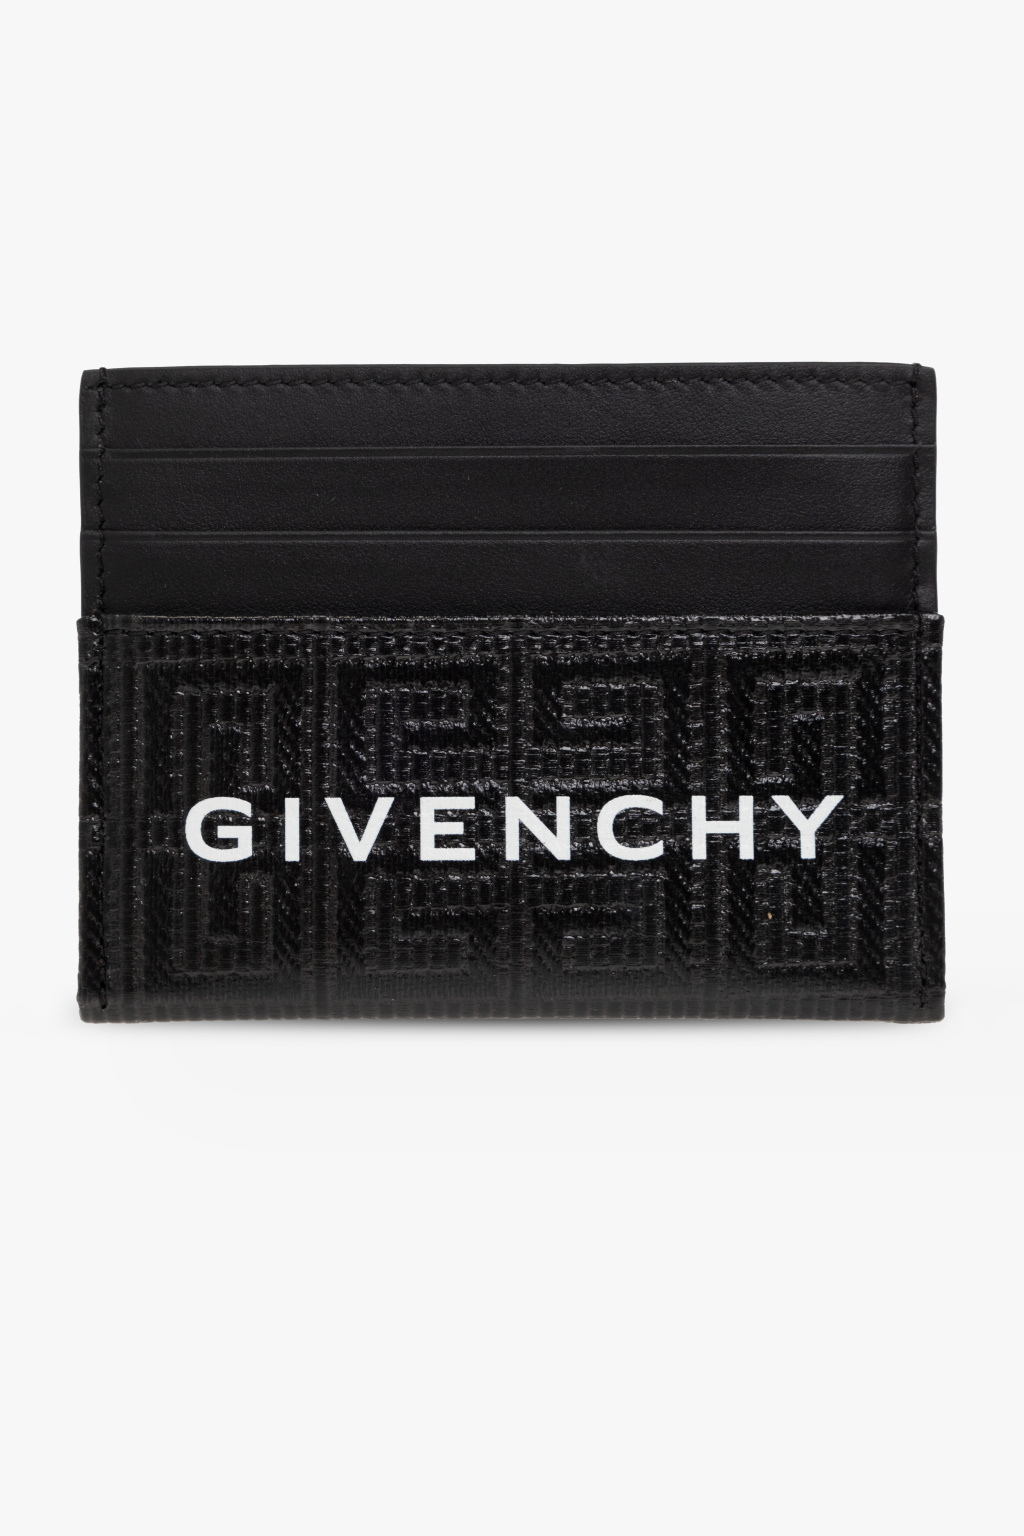 Givenchy second givenchy medium Antigona tote bag